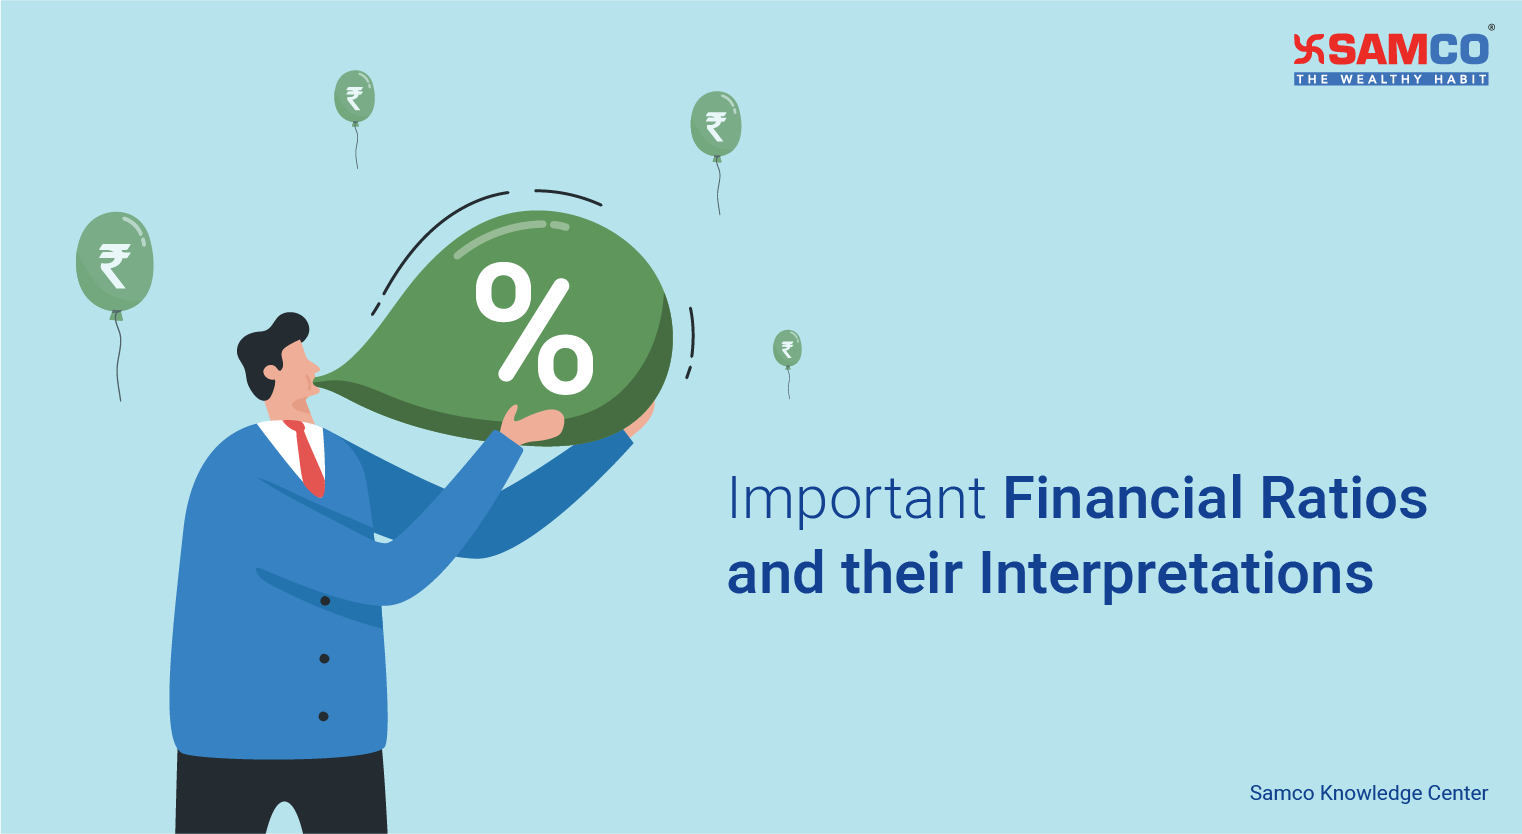  Important Financial Ratios and their Interpretations 